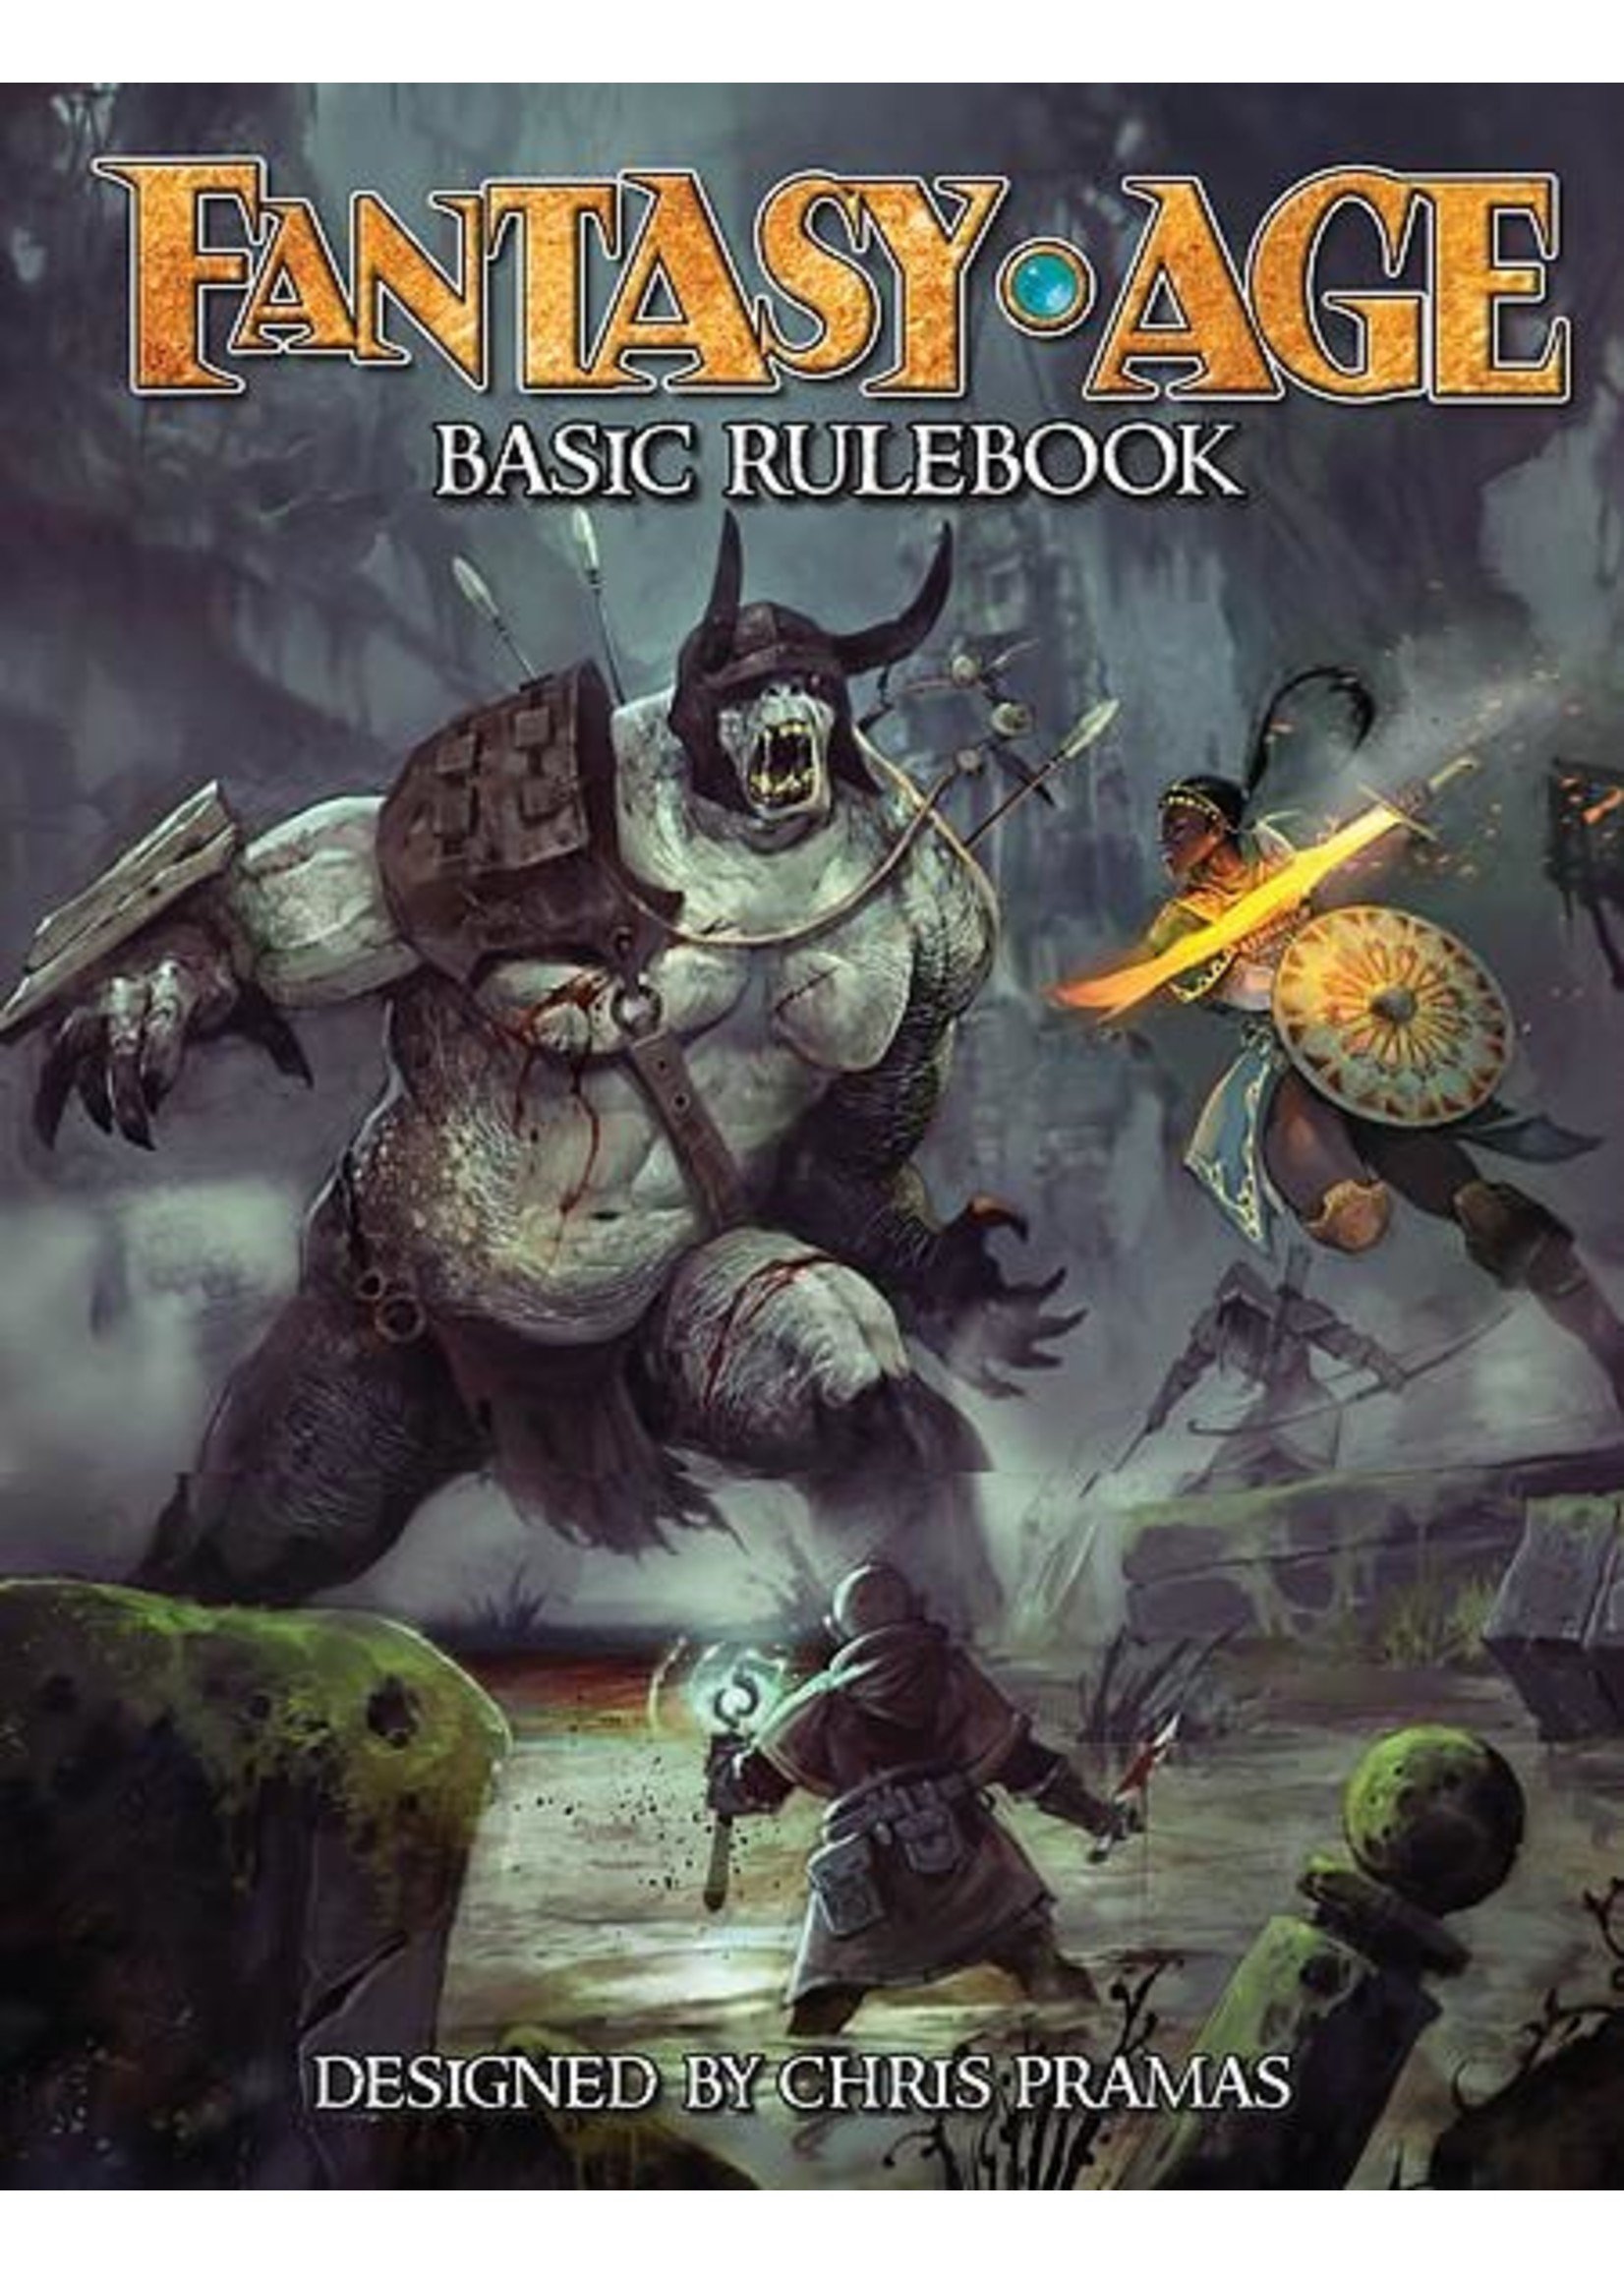 Fantasy AGE RPG: Basic Rulebook Roleplaying Game Hardcover